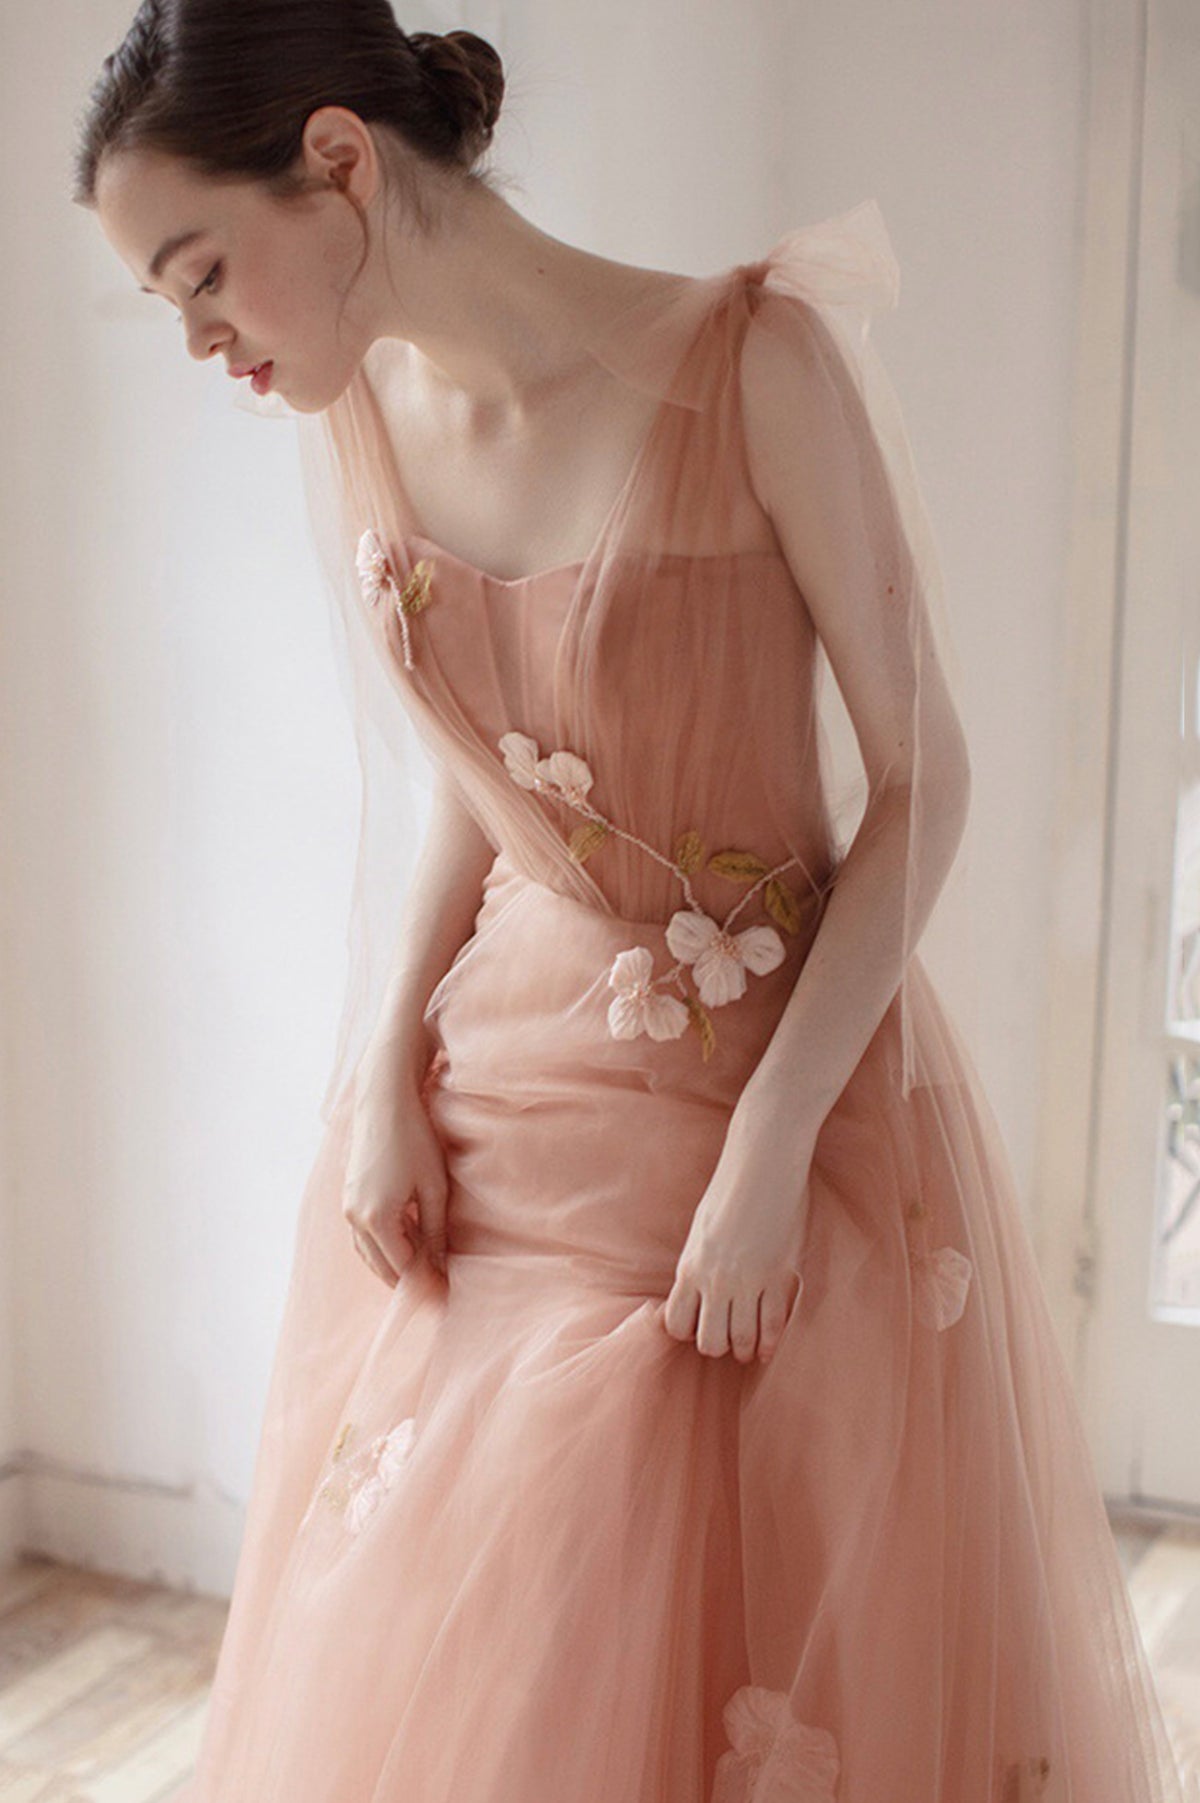 Pink Tulle Long A-Line Prom Dress, Cute Graduation Dress